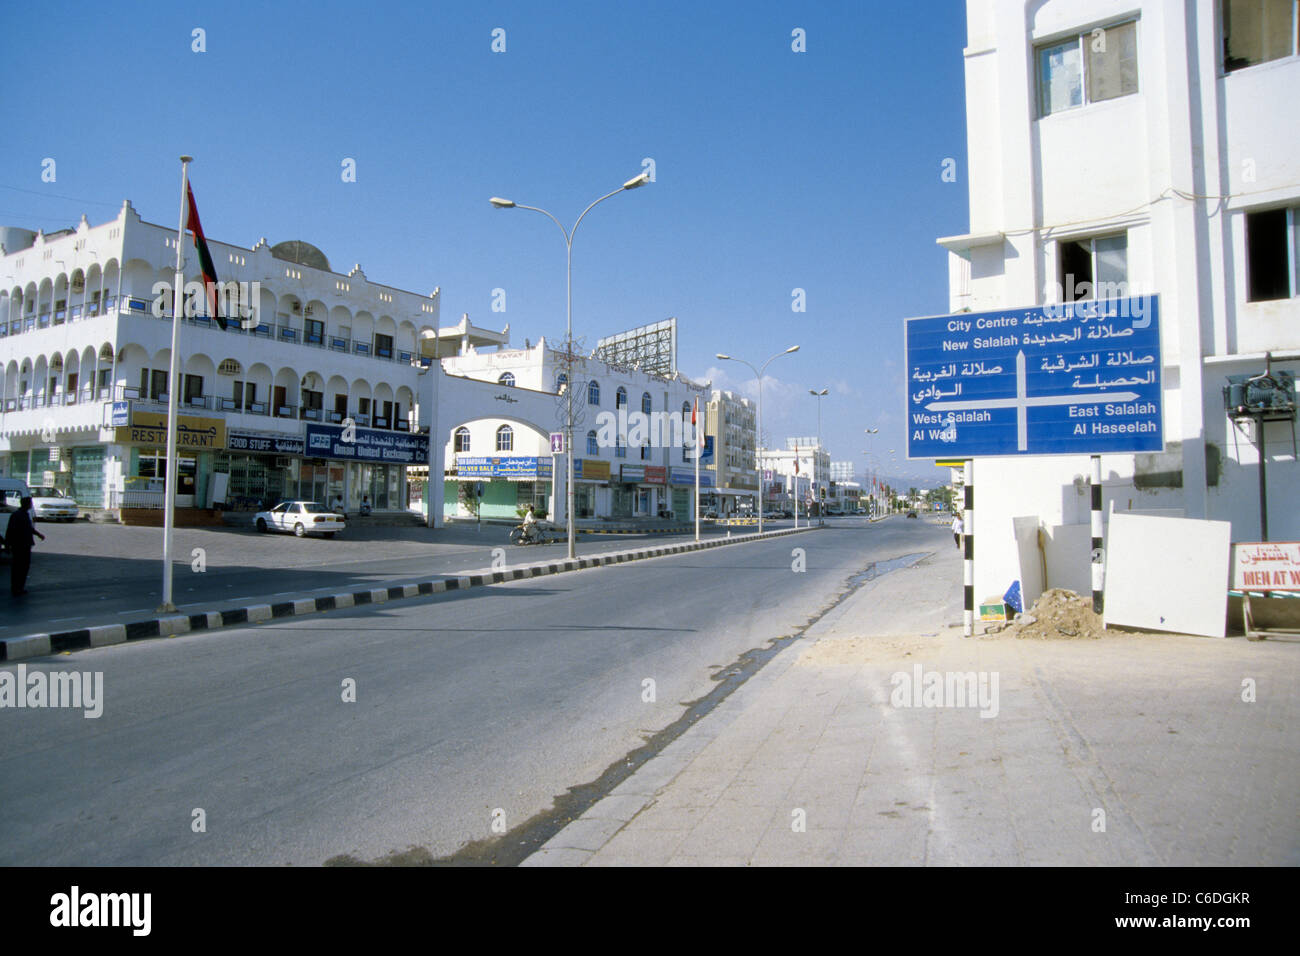 Strasse und Wegweiser in Salalah, Oman, Street nella città di Salalah, Sultanato di Oman Foto Stock